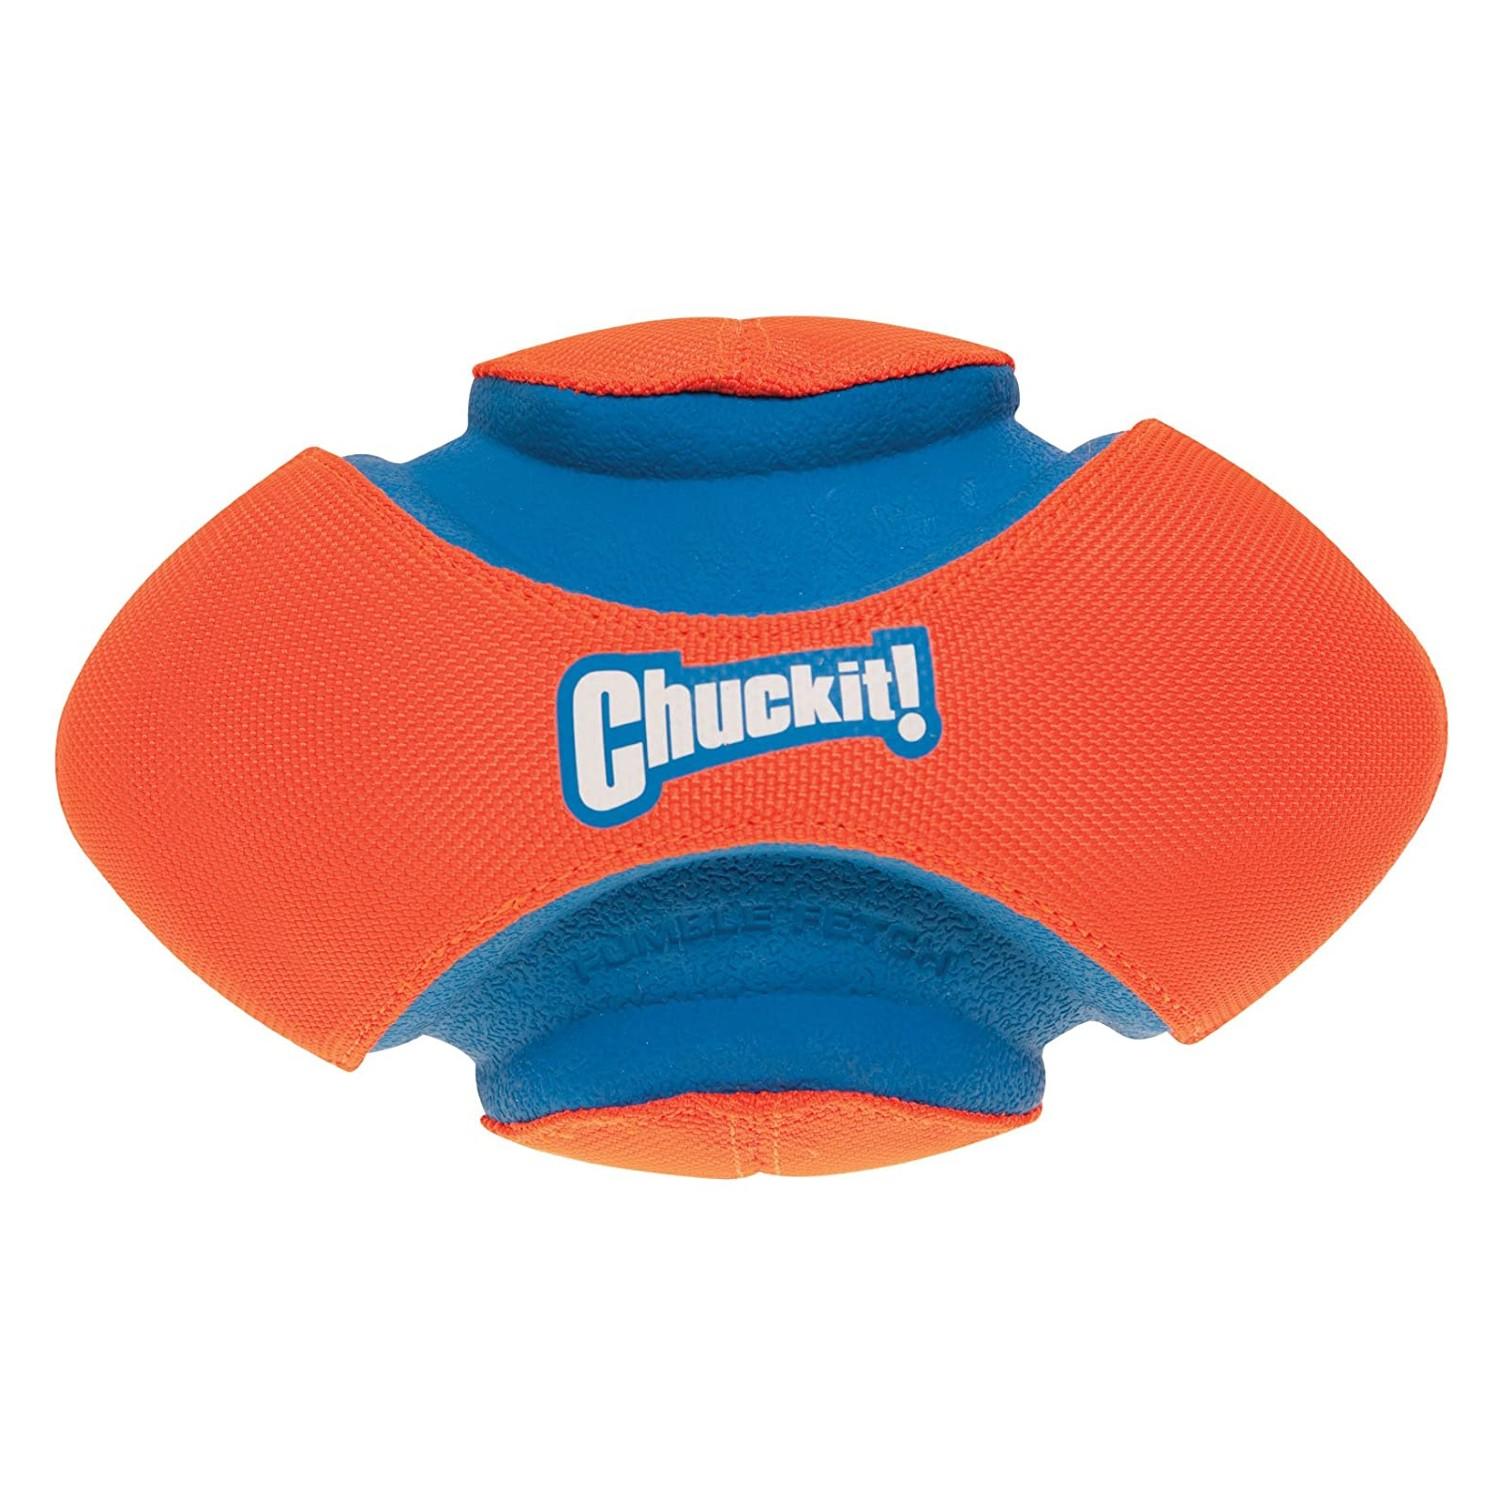 Chuckit! Fumble Fetch Dog Toy - Orange